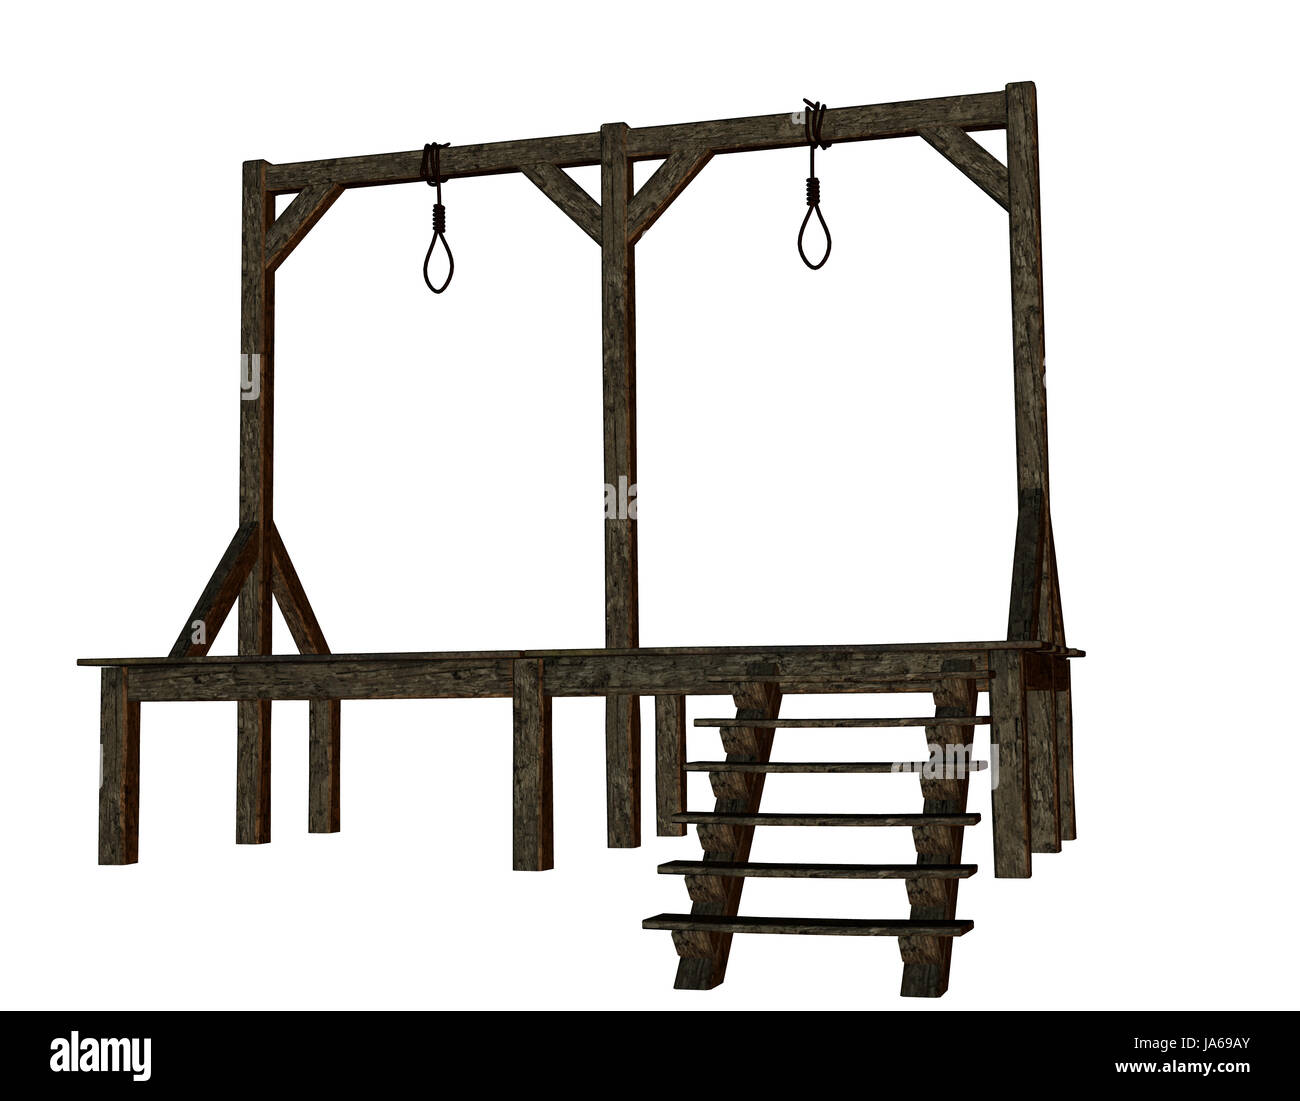 wood-gallows-scaffold-scaffolding-execution-capital-punishment-hanging-JA69AY.jpg